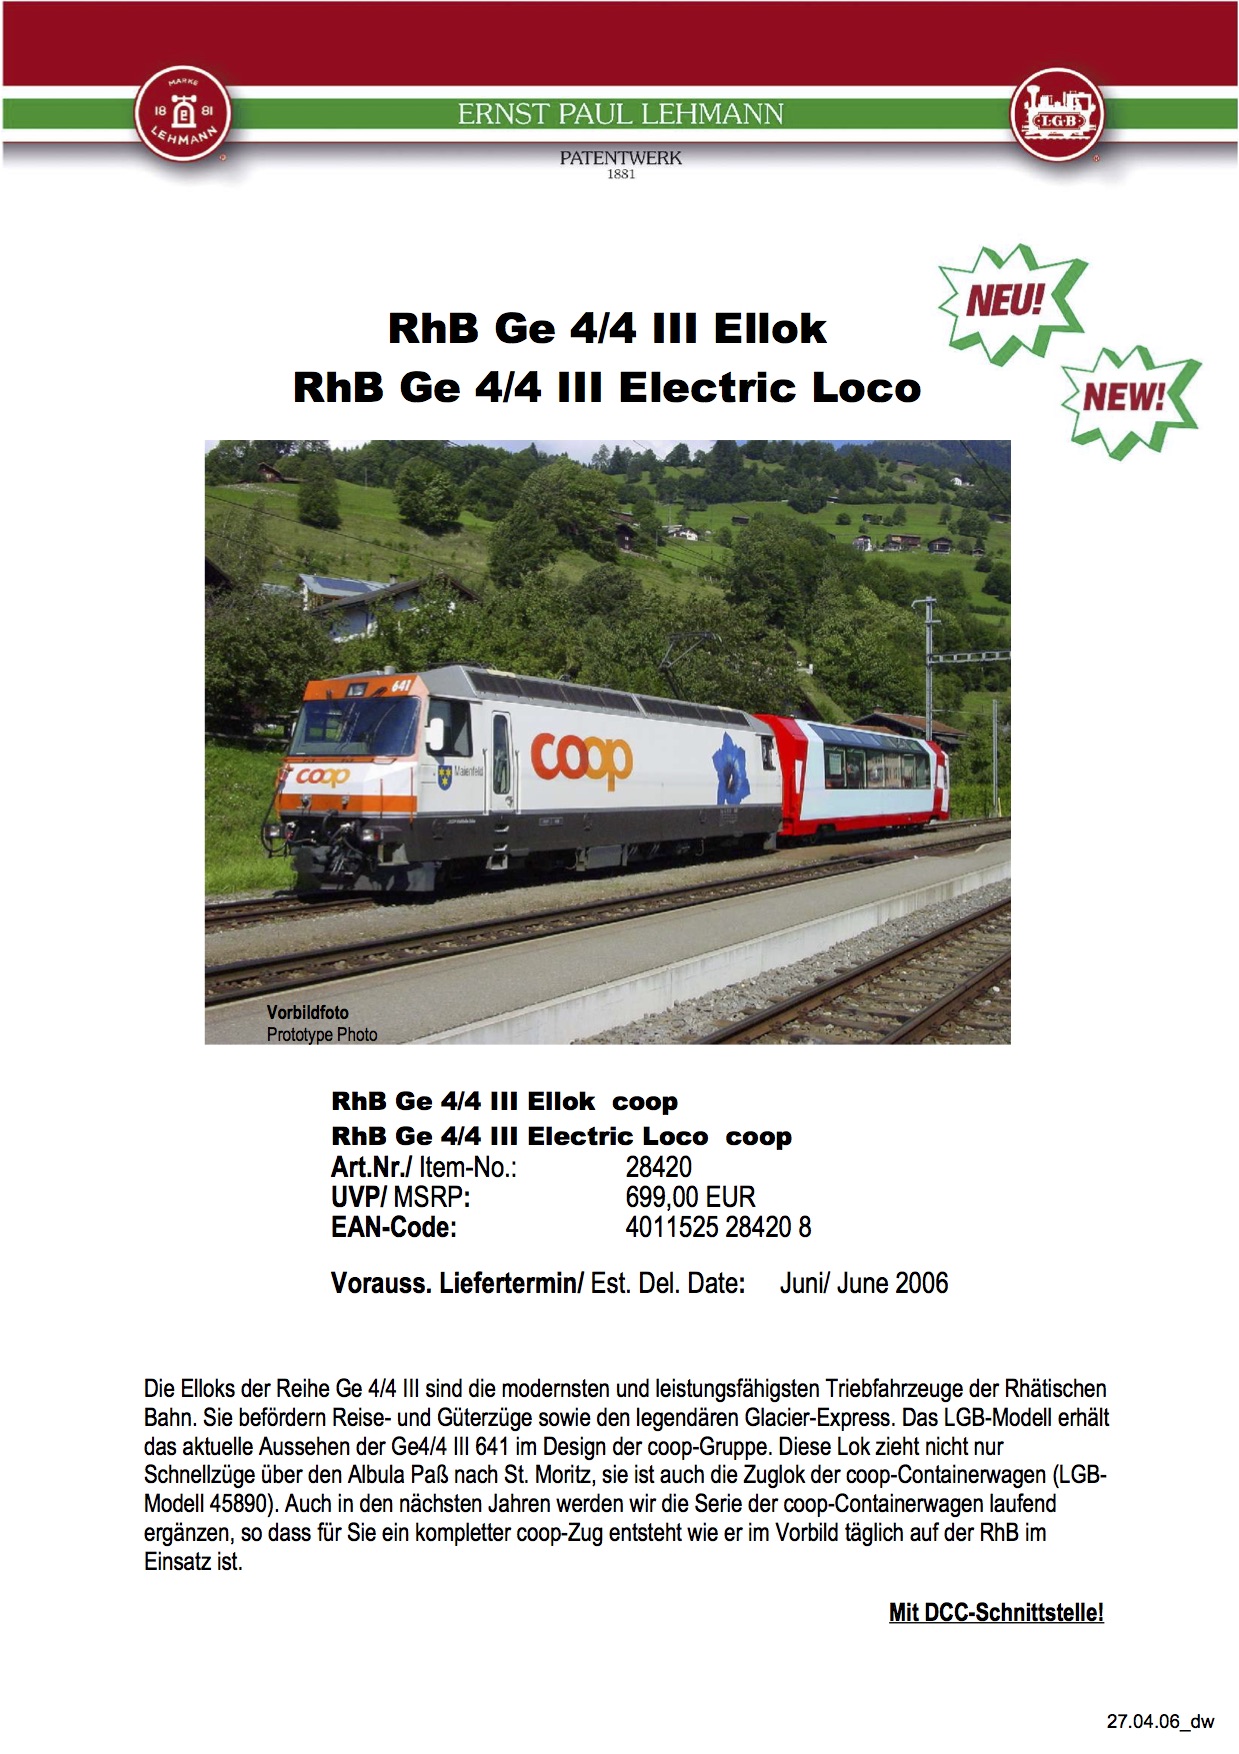 LGB Infoblatt (Information flyer) 2006 - Item 28420 RhB Ge 4/4 III Ellok (Electric Loco) coop